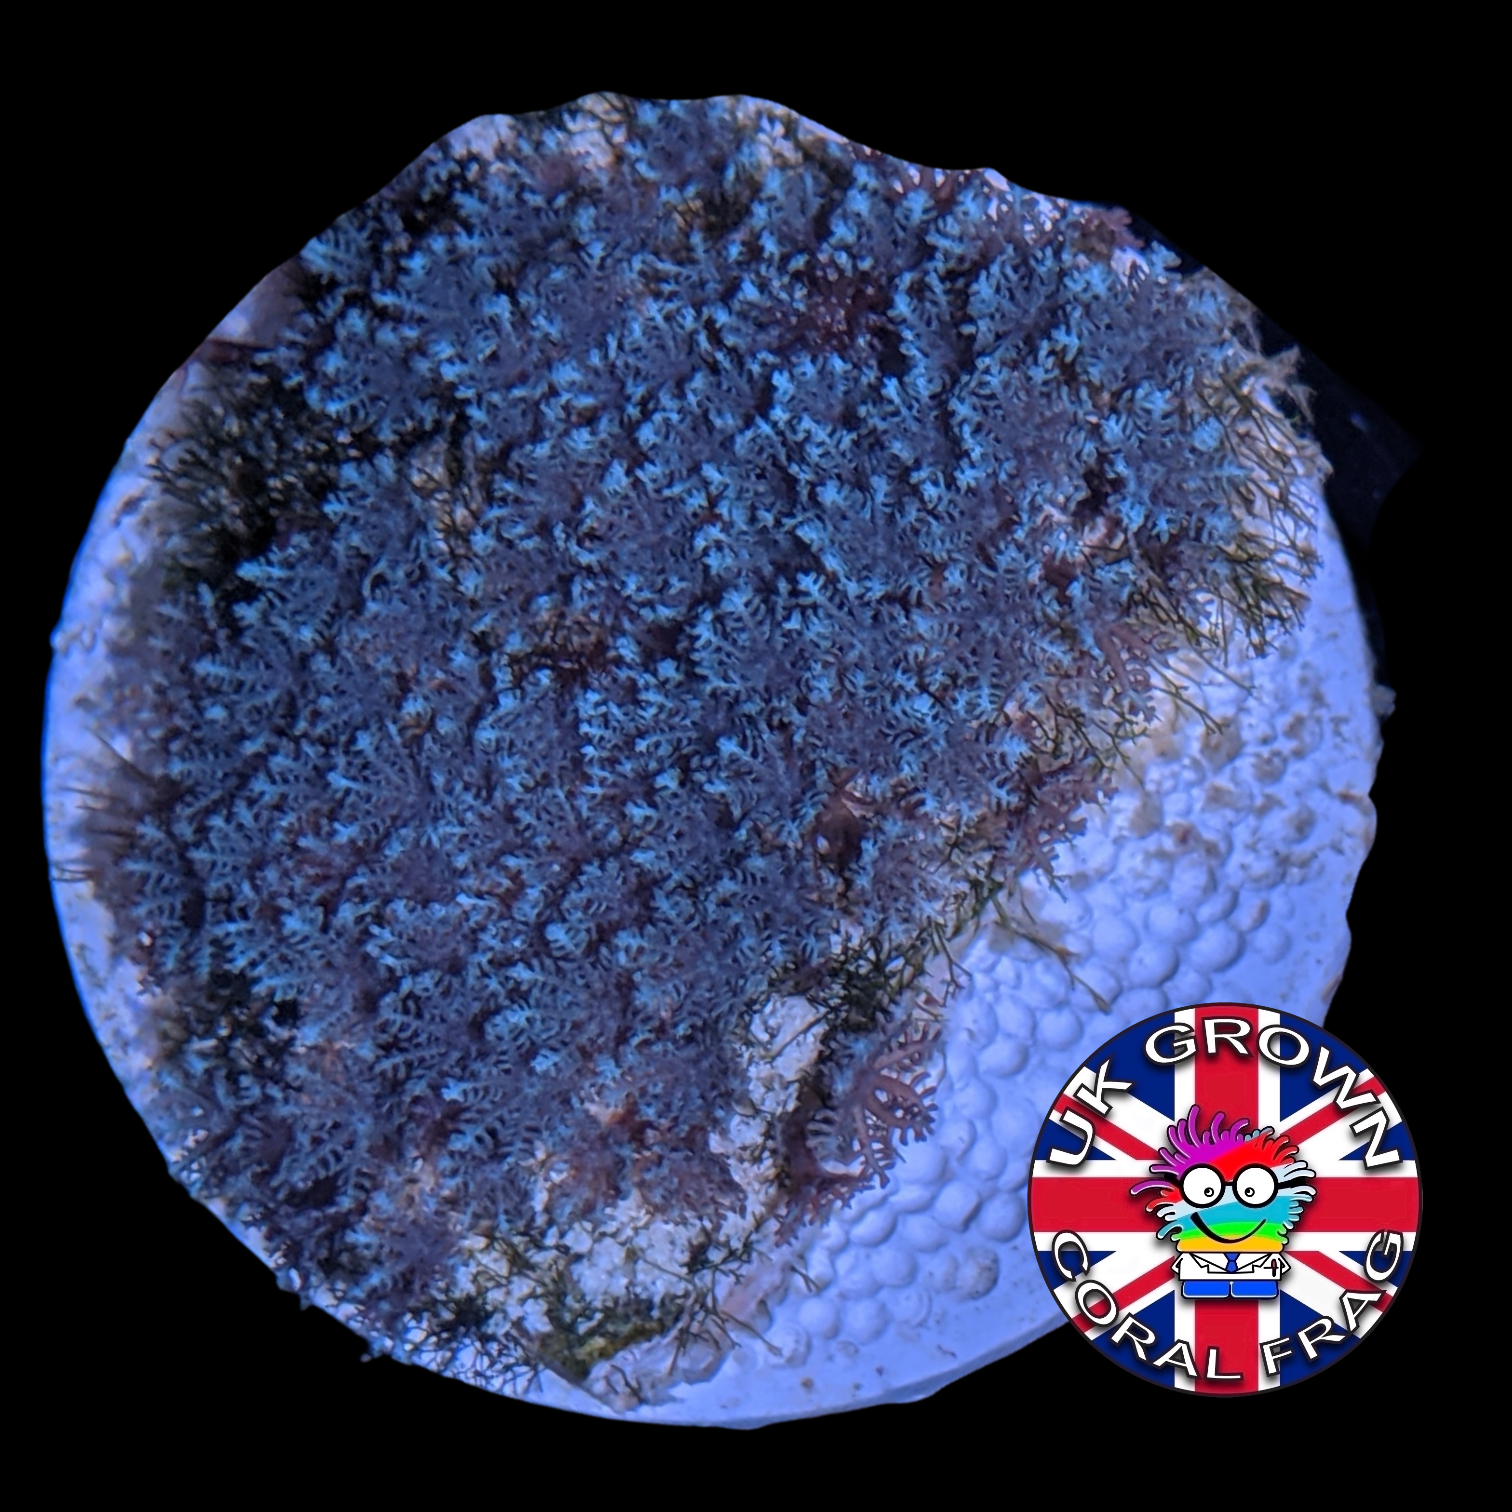 Rare Blue Star Polyps (UK Grown)